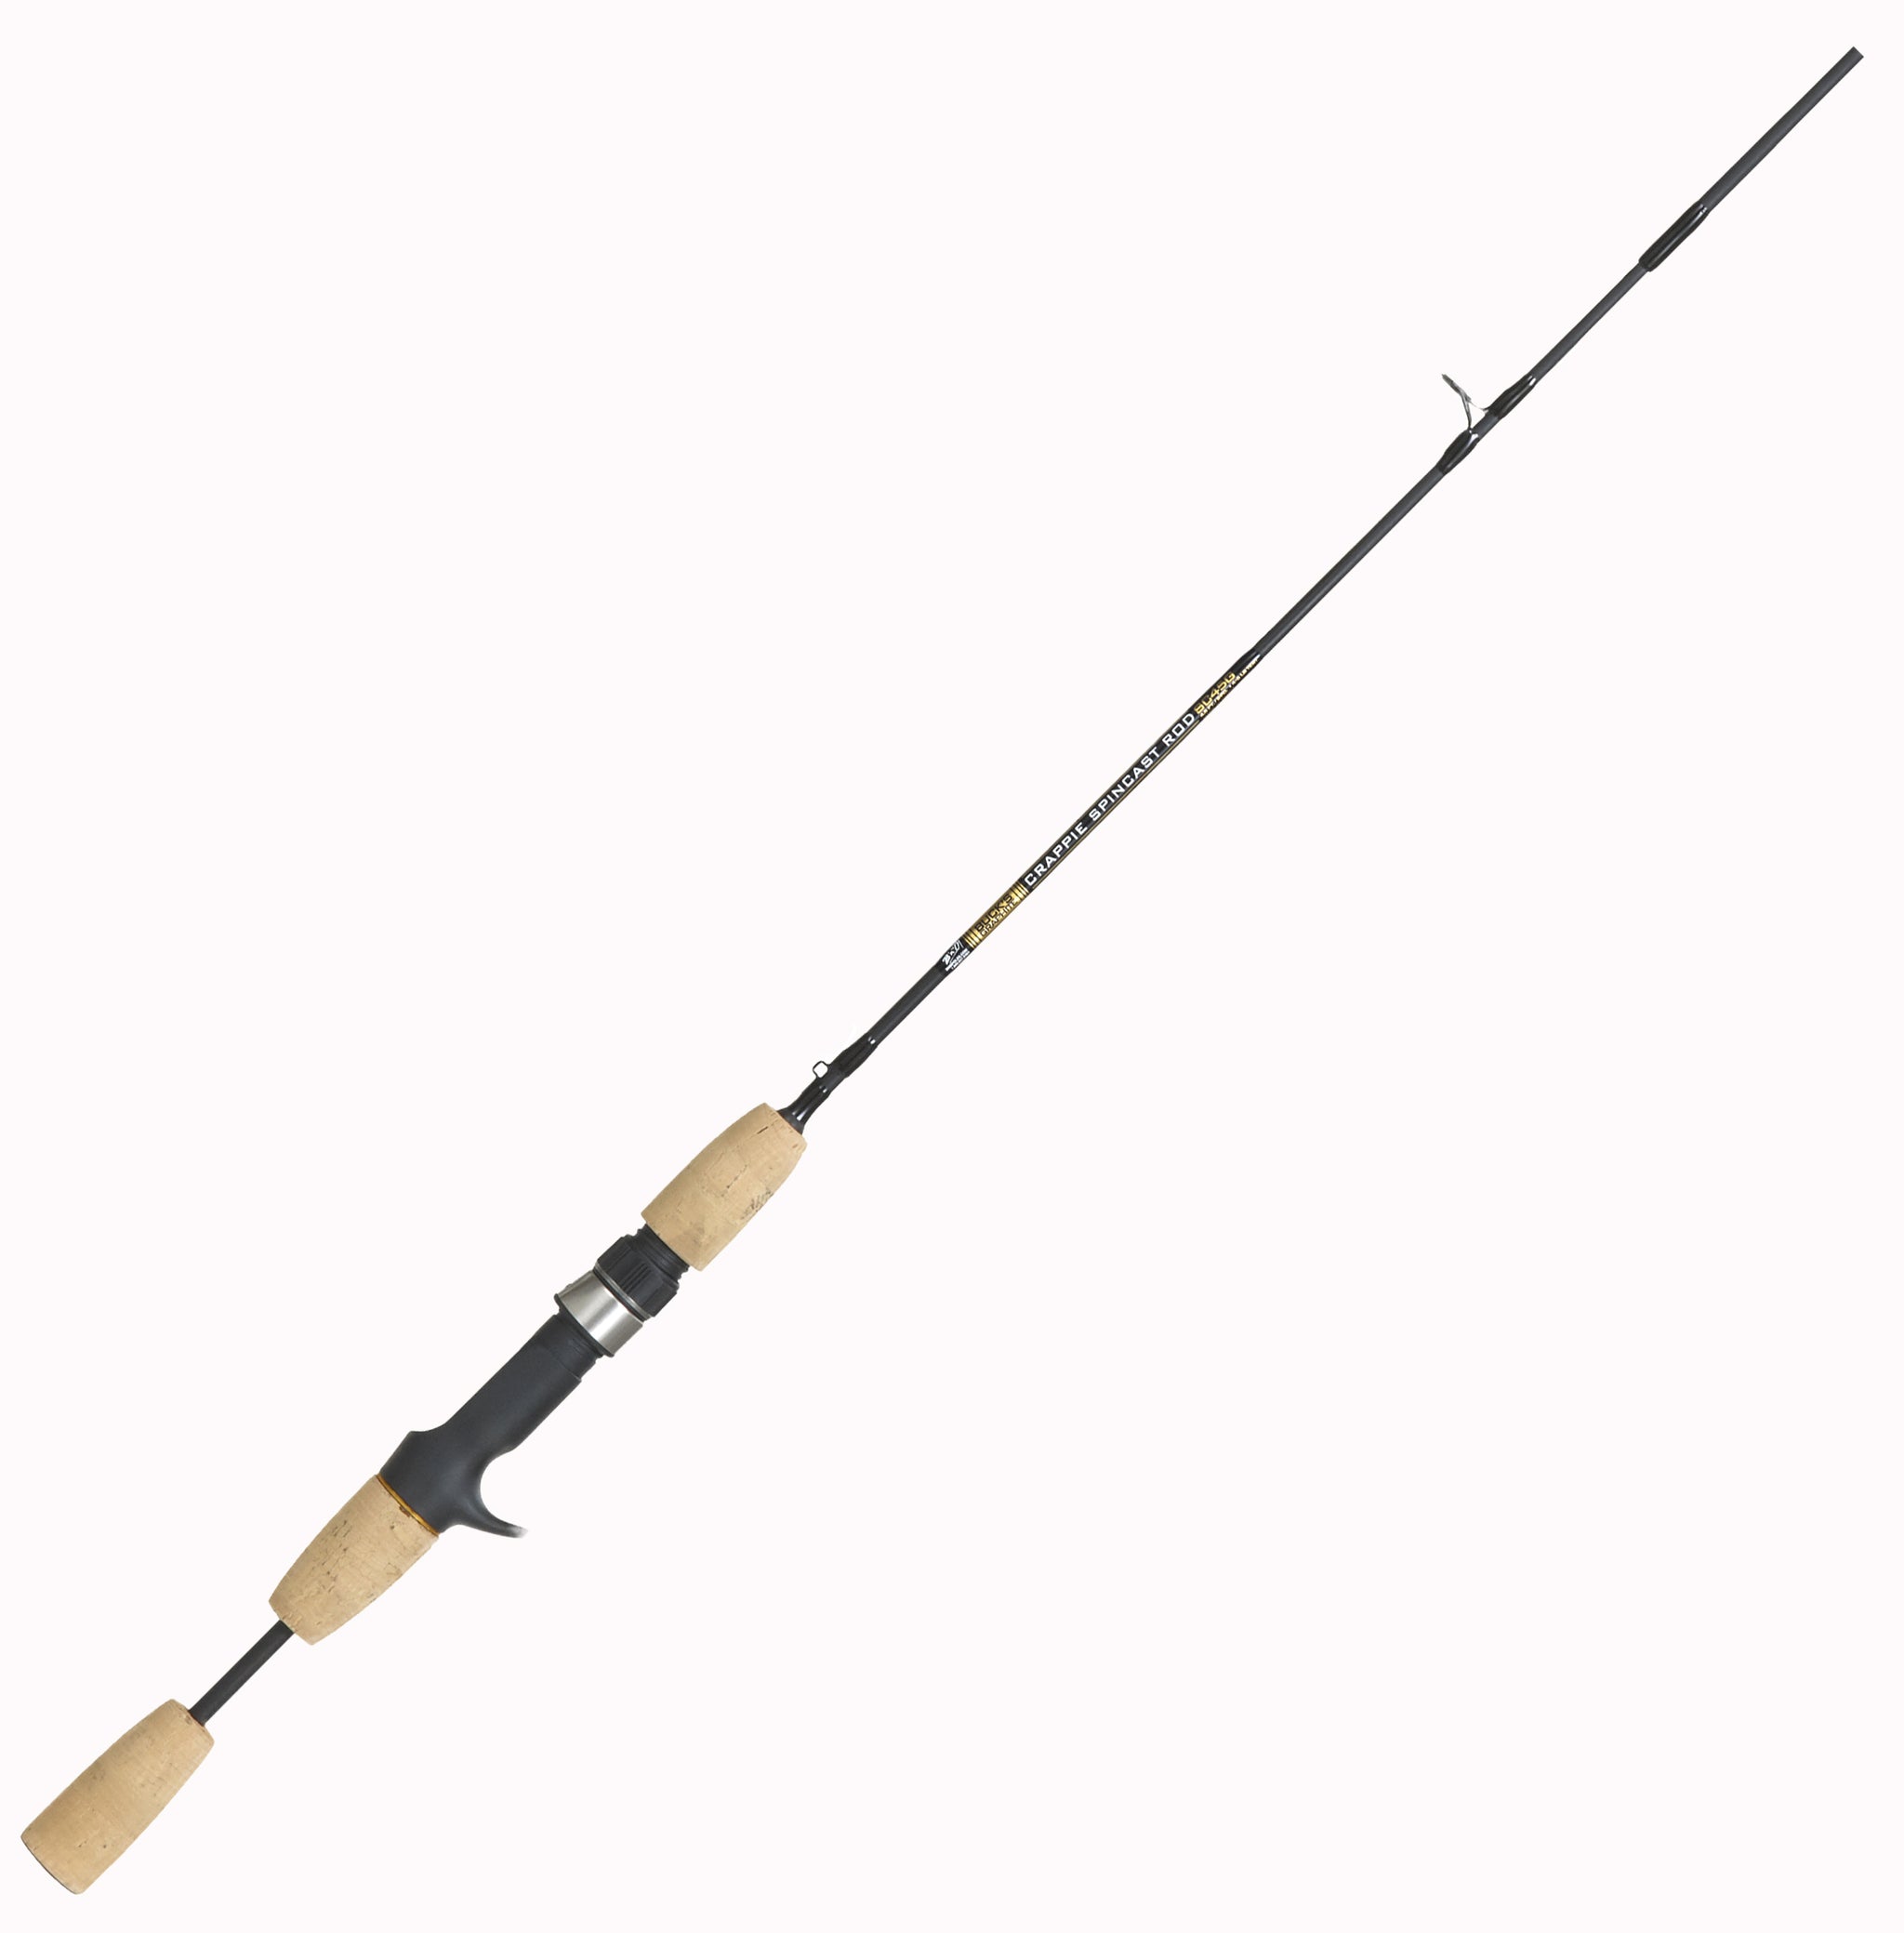 Fishing rod action, Fishing rod characteristics